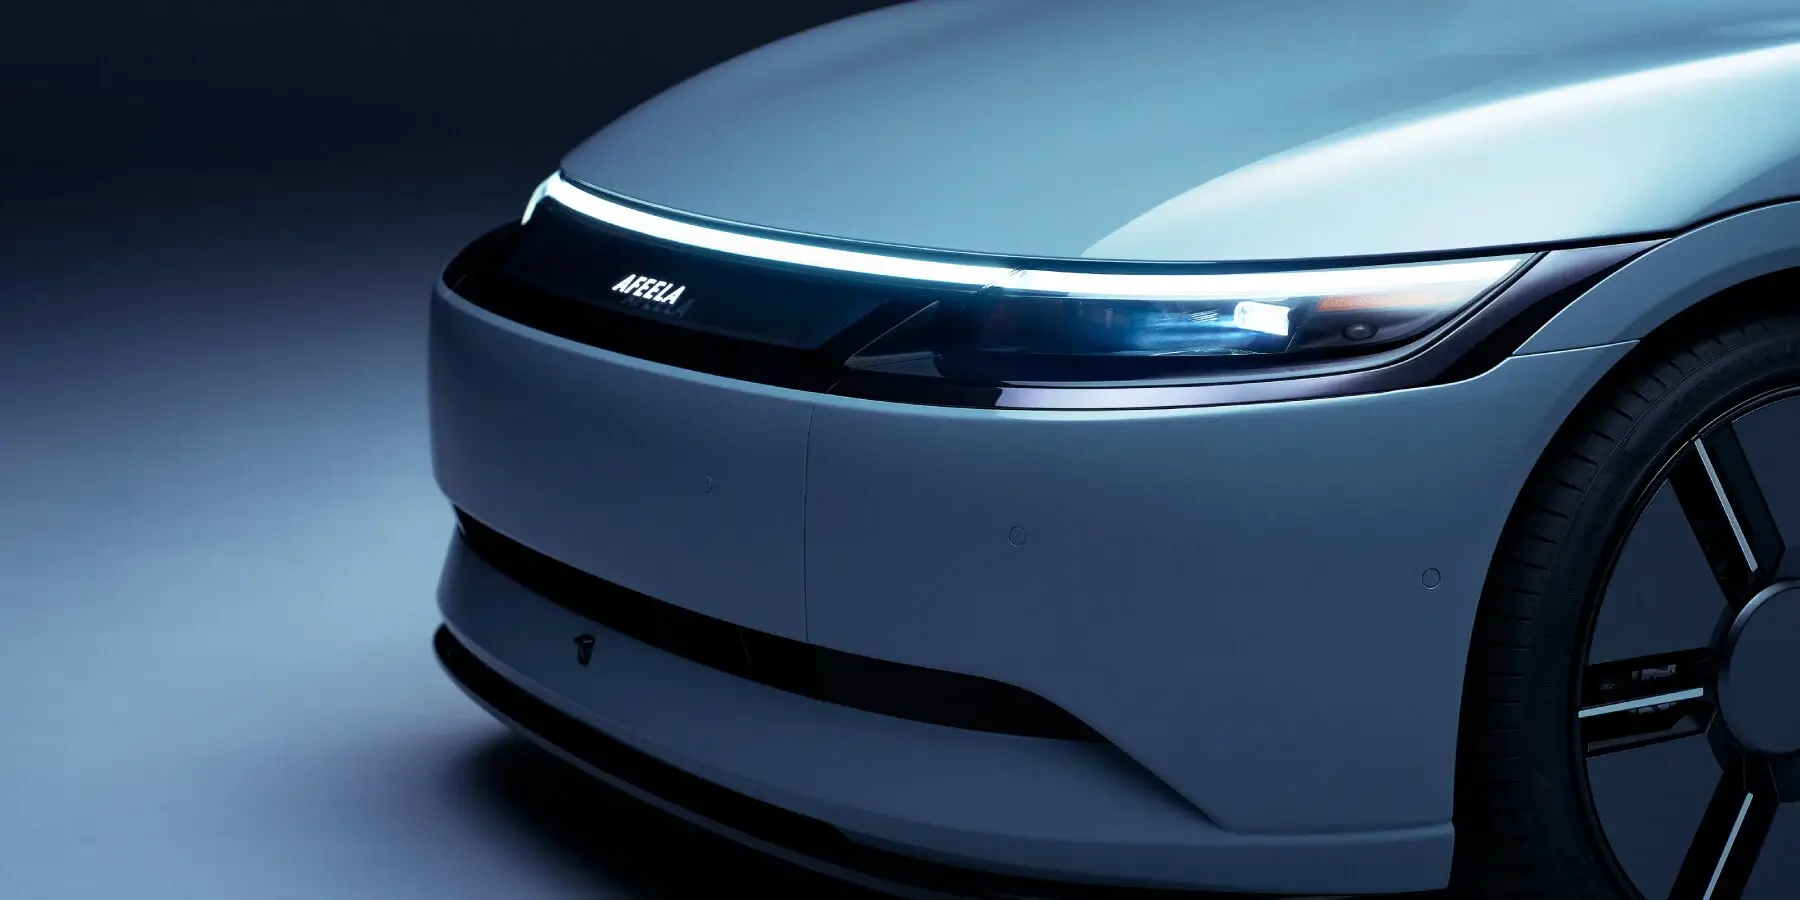 Sony Honda’s Afeela: A Glimpse into the Future of Autonomous Driving